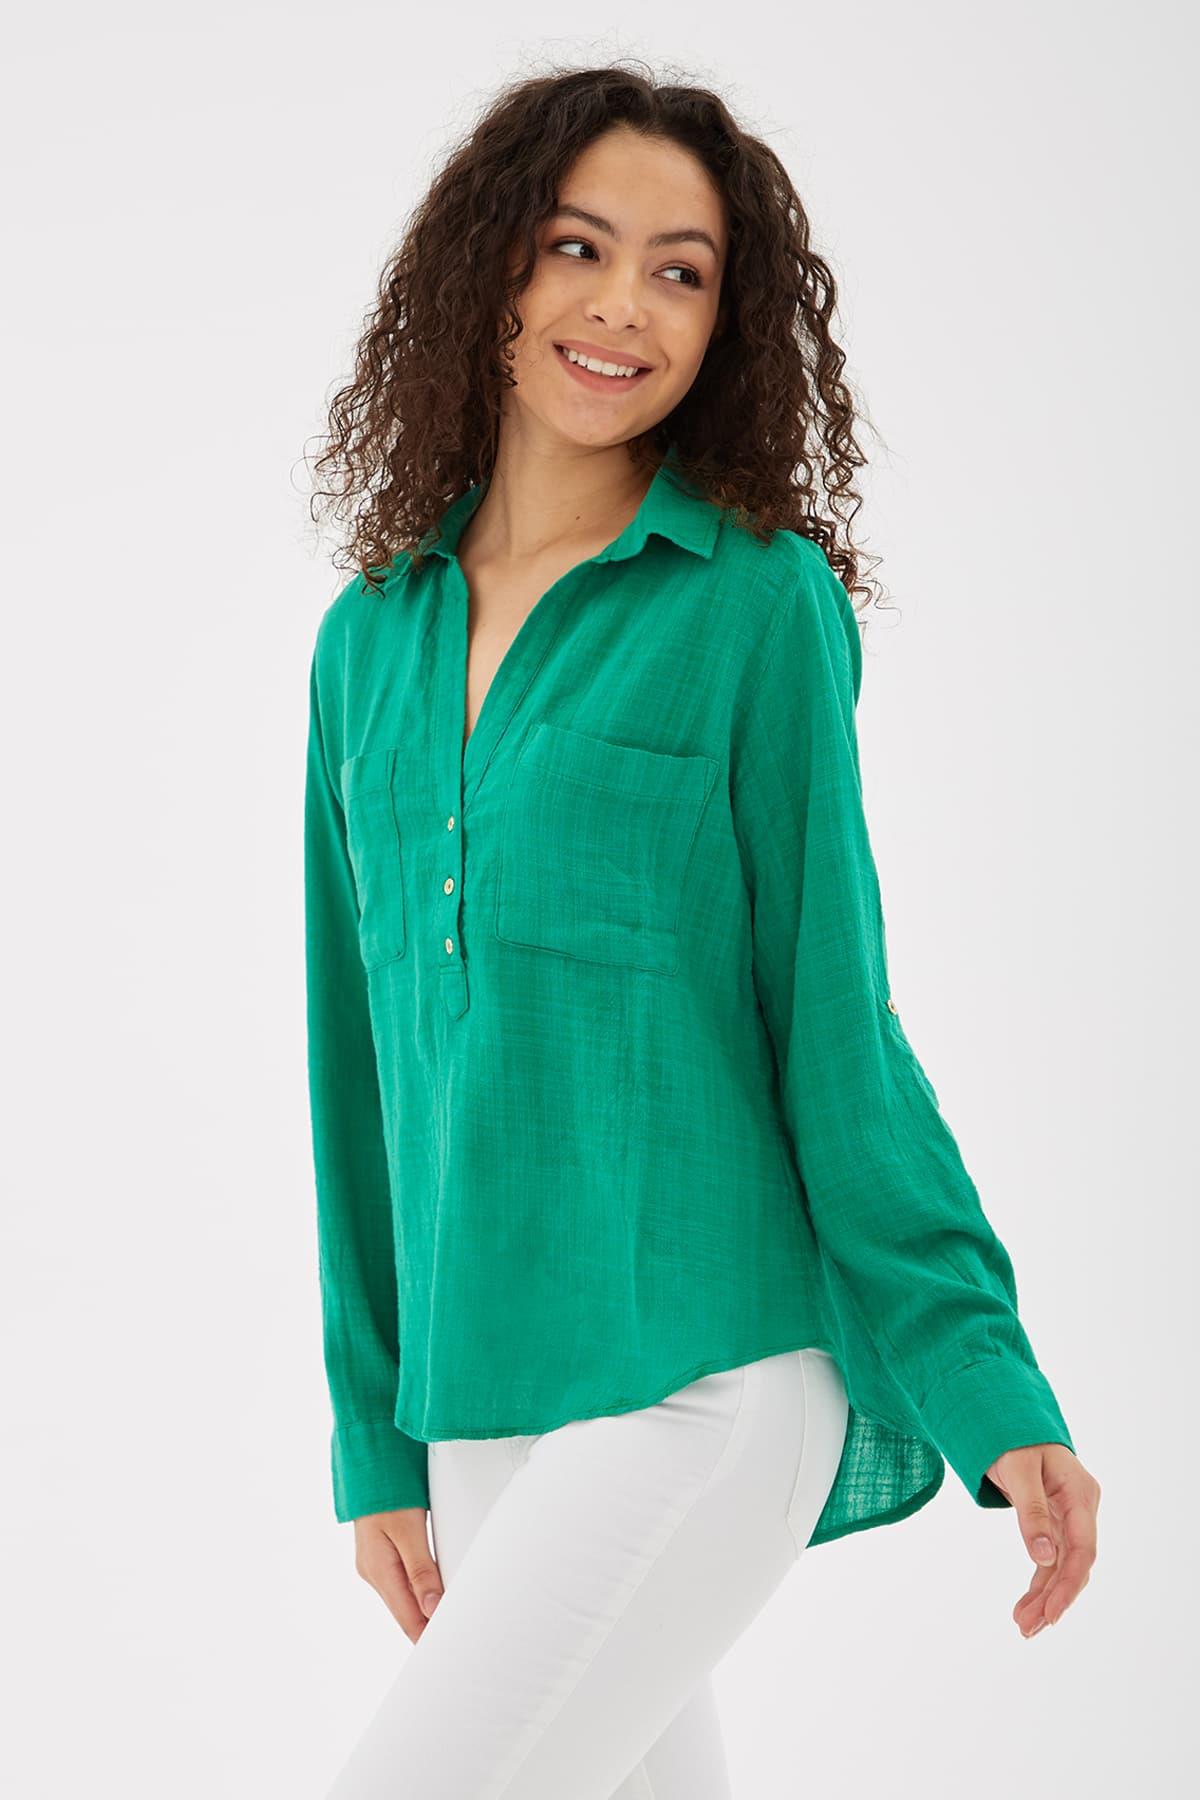 Gömlek Yeşil / Green | Fashionfriends